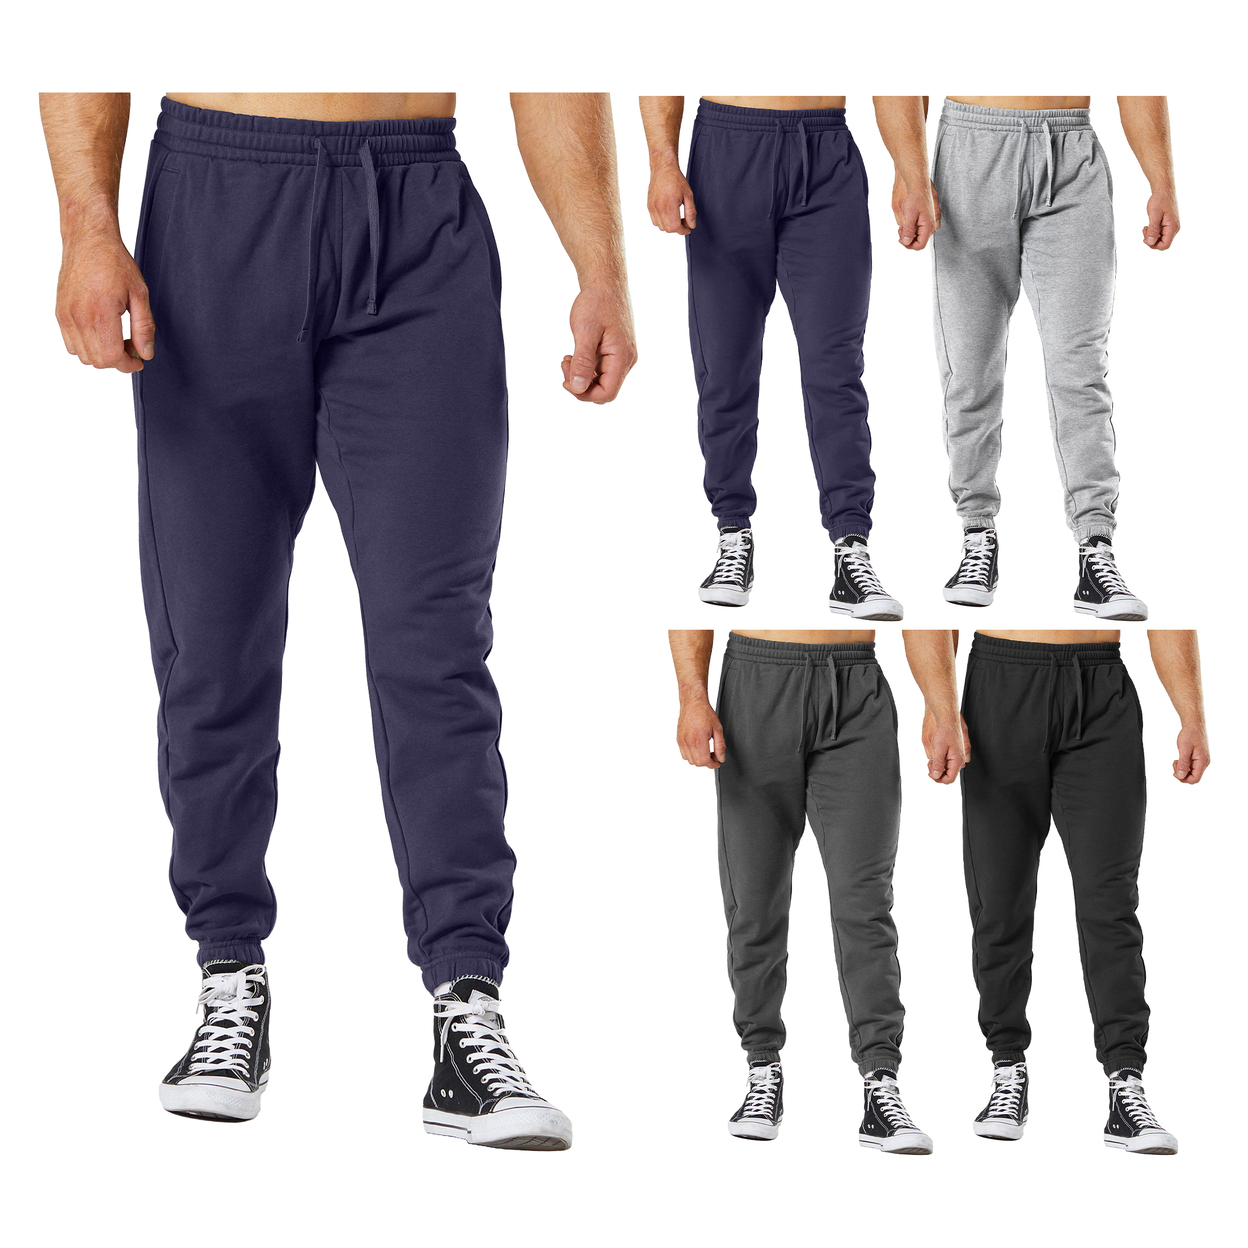 Men's Ultra-Soft Cozy Winter Warm Casual Fleece Lined Sweatpants Jogger - Black, Xx-large